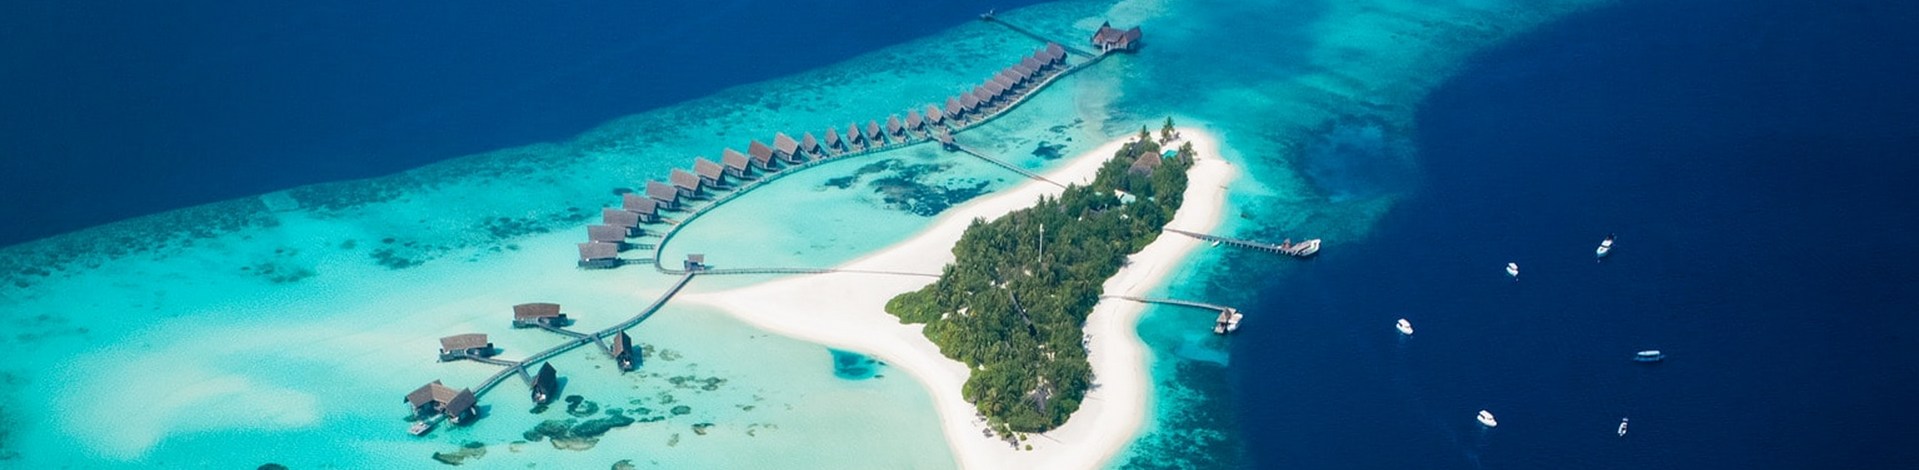 Atoll lagon paradisiaque plage sable blanc Maldives